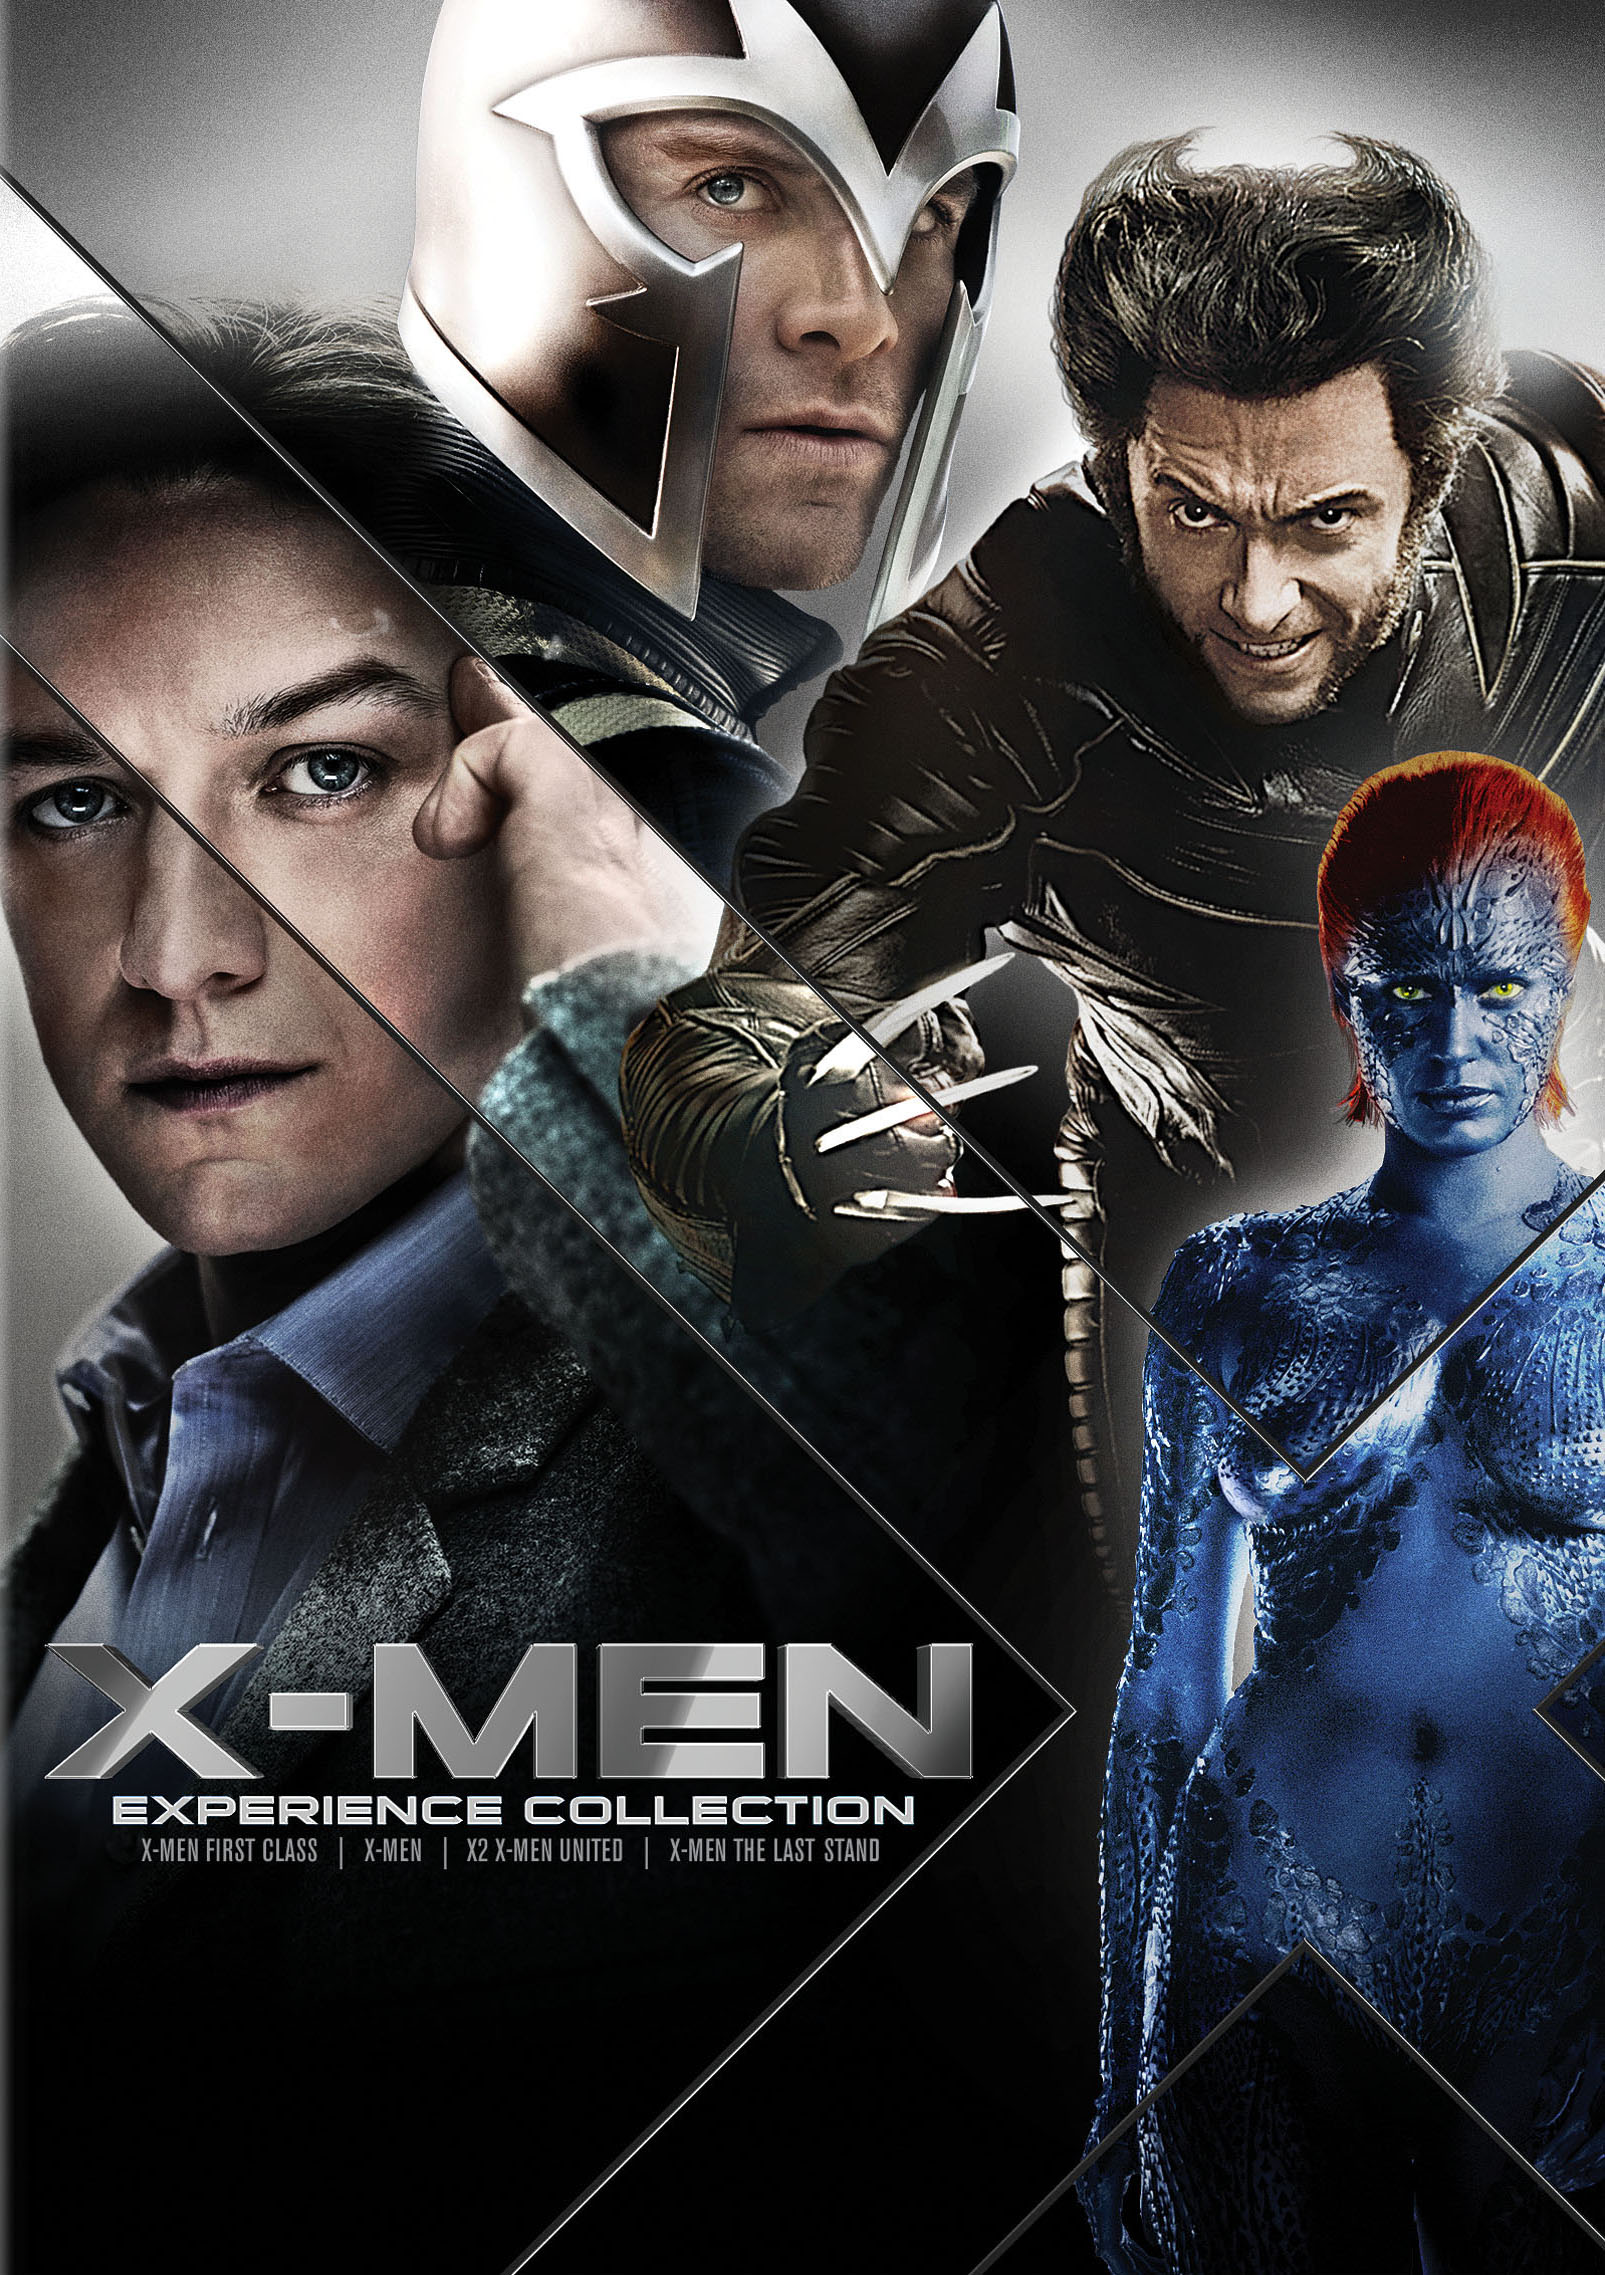 Assorted 4 Pack DVD Bundle: The Social Network, Astonishing X-Men